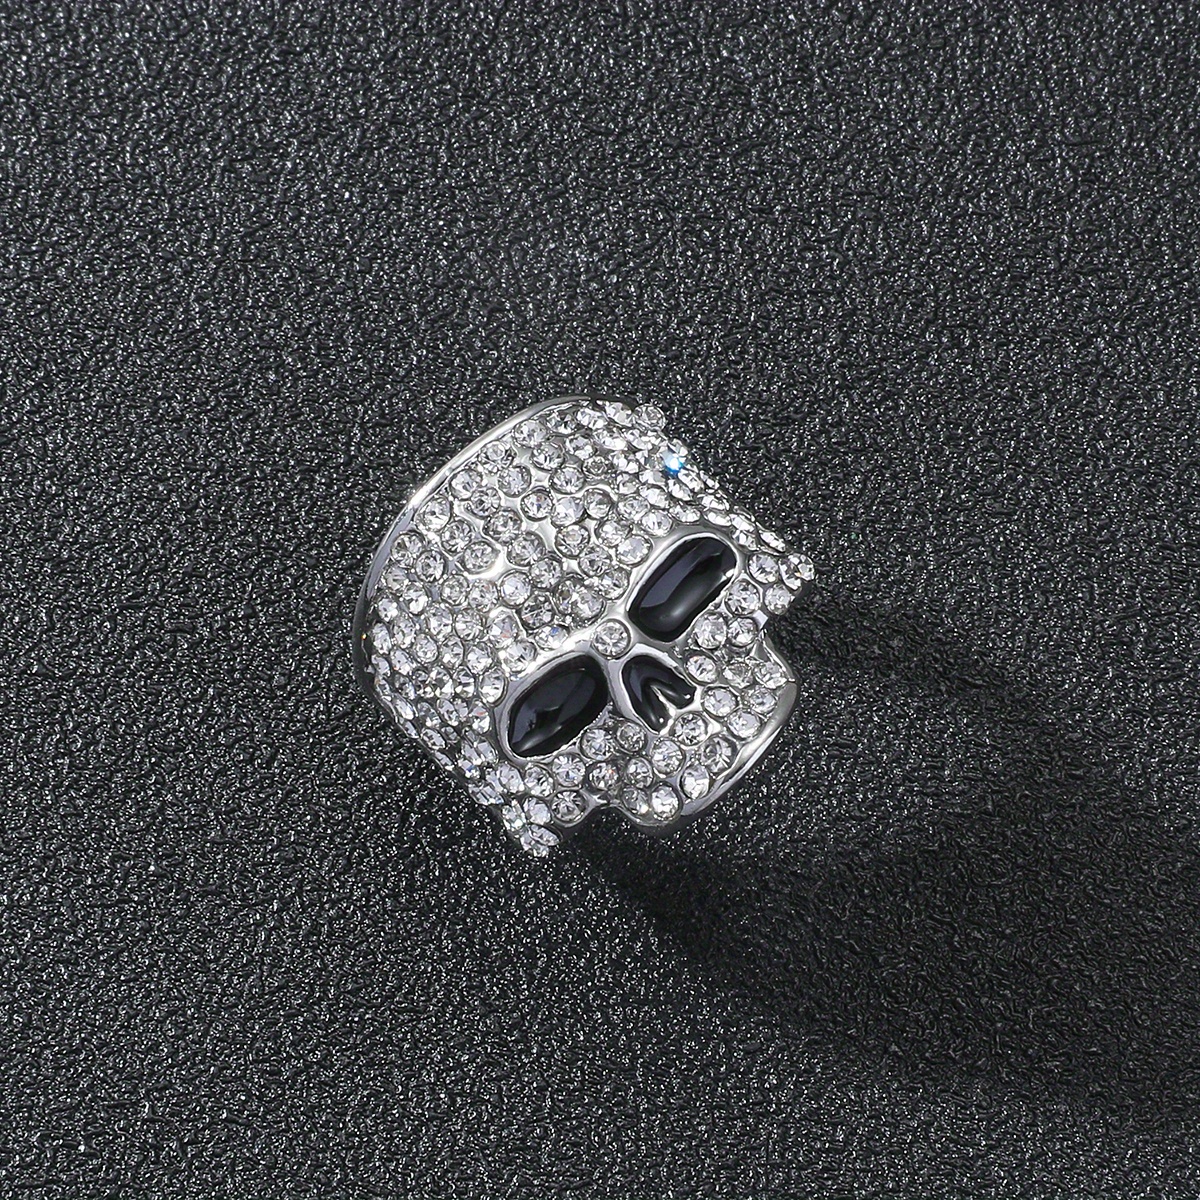 Skull Crossbones Bling Rhinestone Adjustable Ring Goth Steampunk Punk